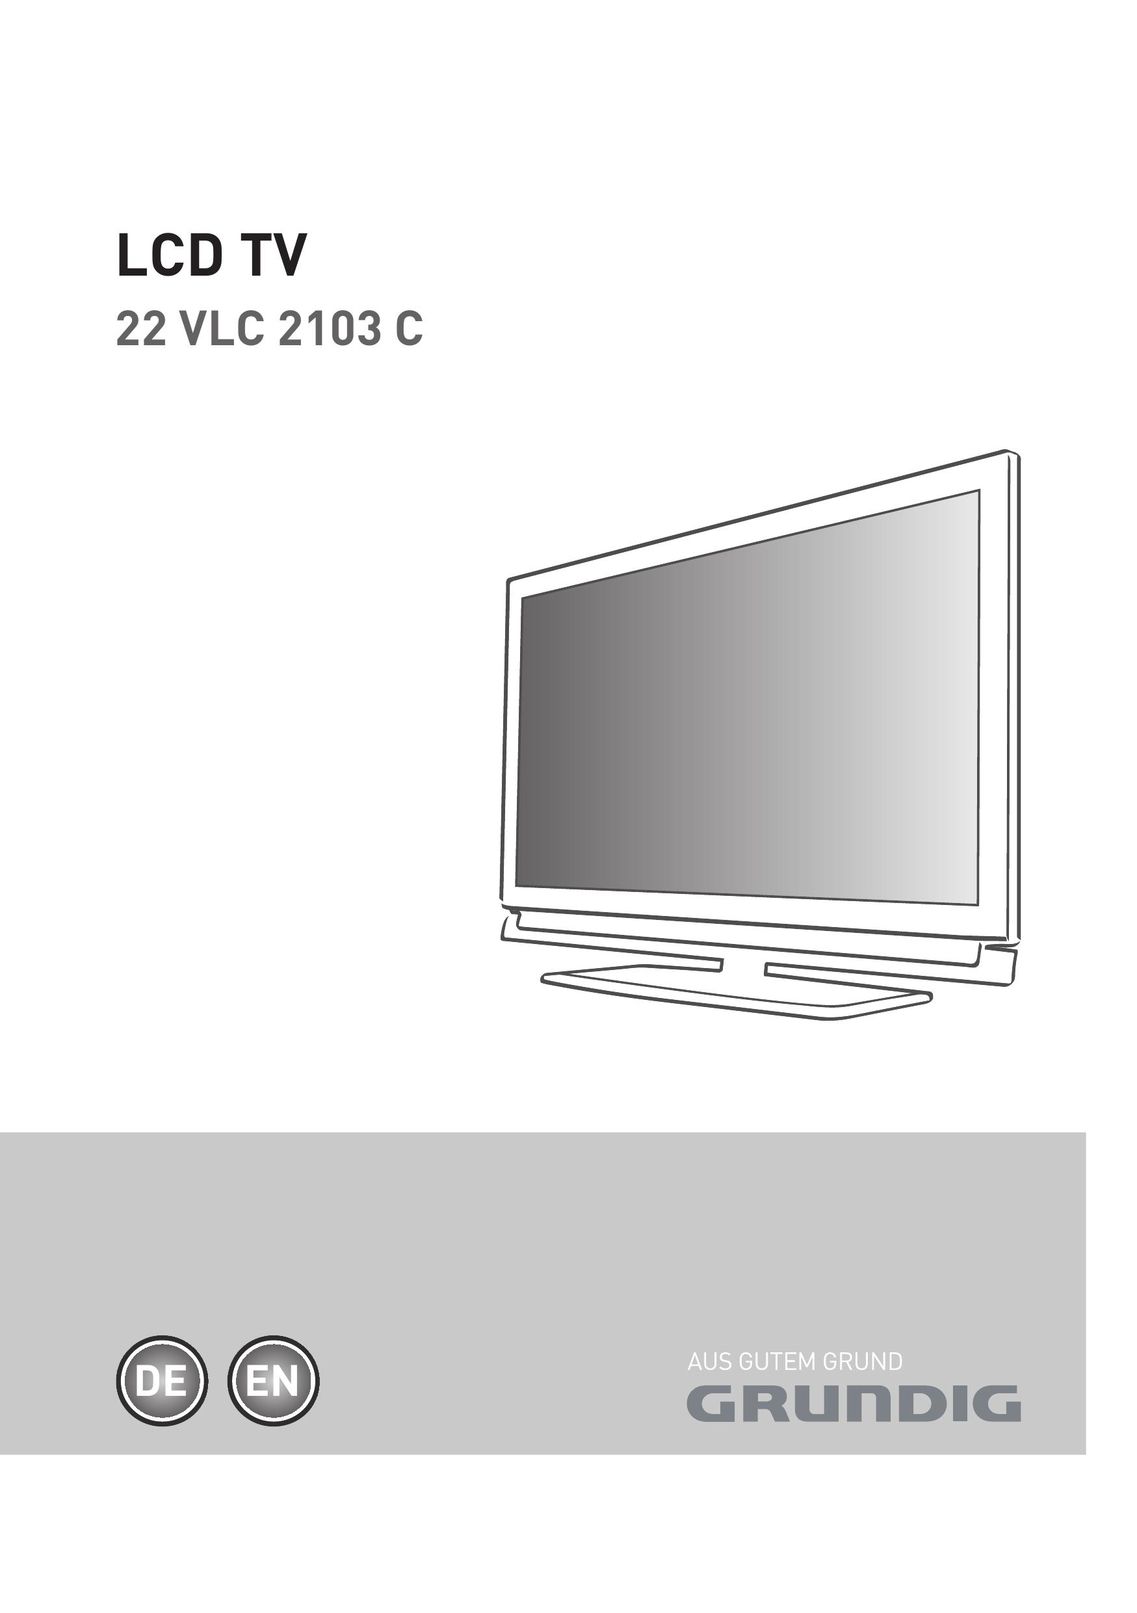 Grundig 22 VLC 2103 C Flat Panel Television User Manual